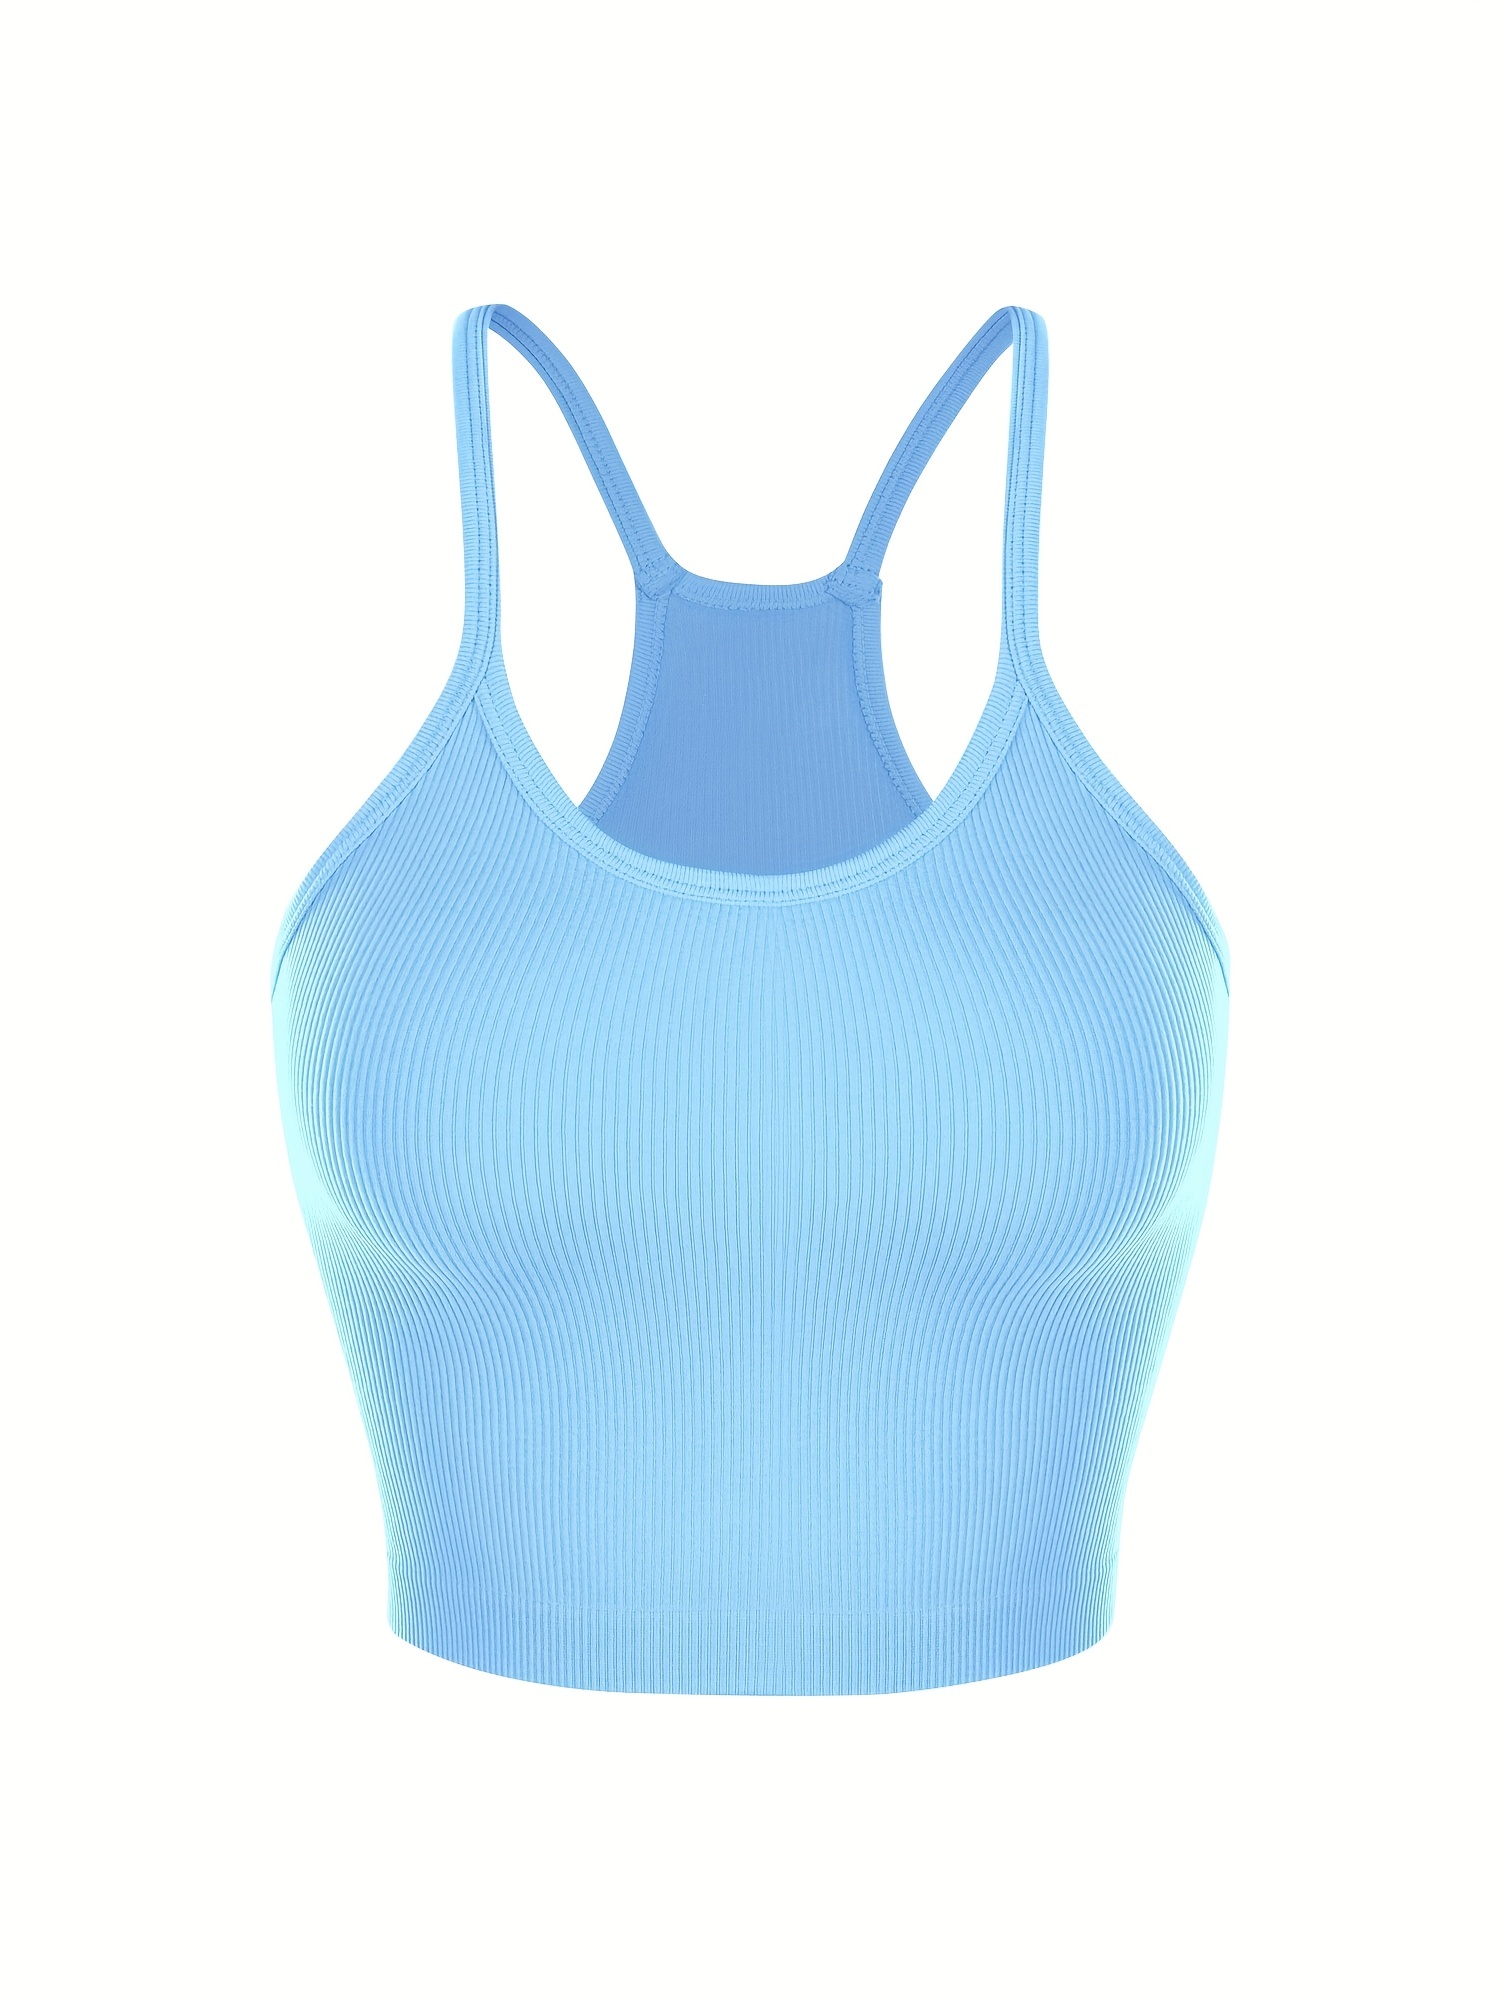 Women's Padded Sports Bra Longline Cami Yoga Workout Crop Tank Tops  Seamless Fitness Running Shirts for Women - AliExpress